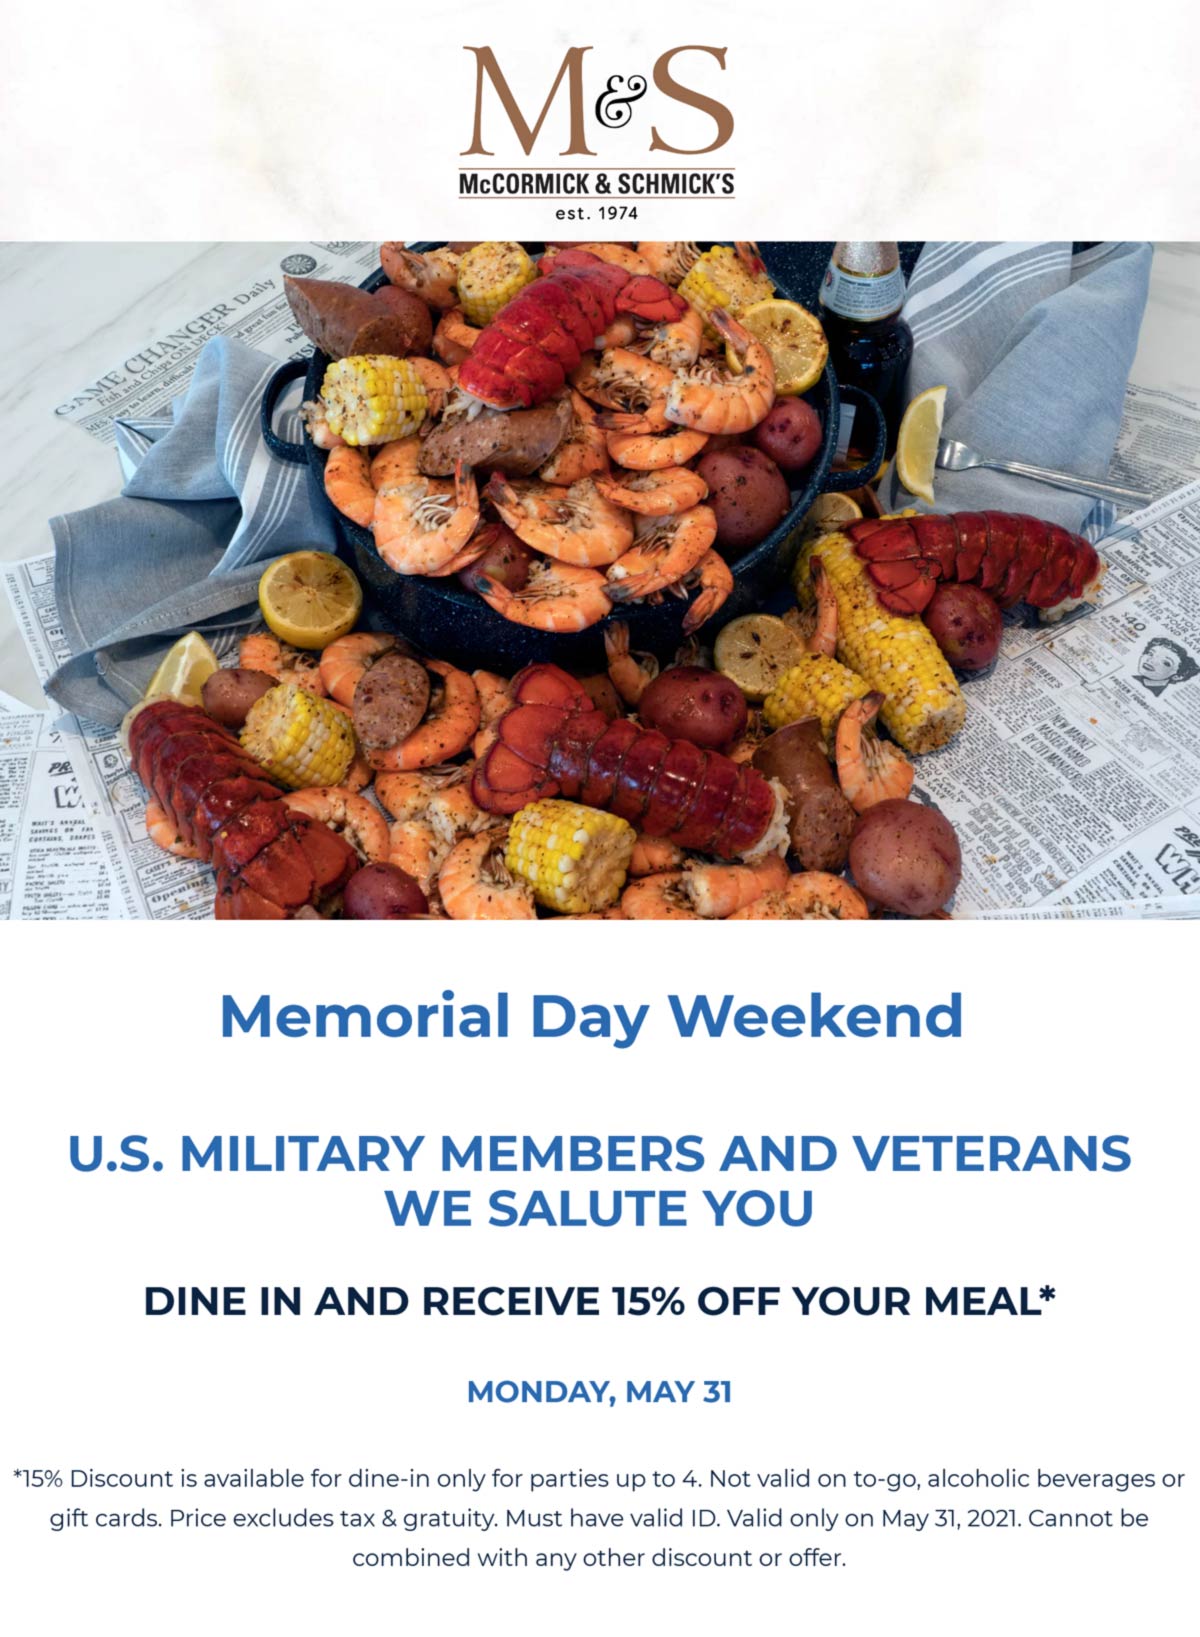 McCormick & Schmicks restaurants Coupon  Military & veterans enjoy 15% off Monday at McCormick & Schmicks restaurants #mccormickschmicks 